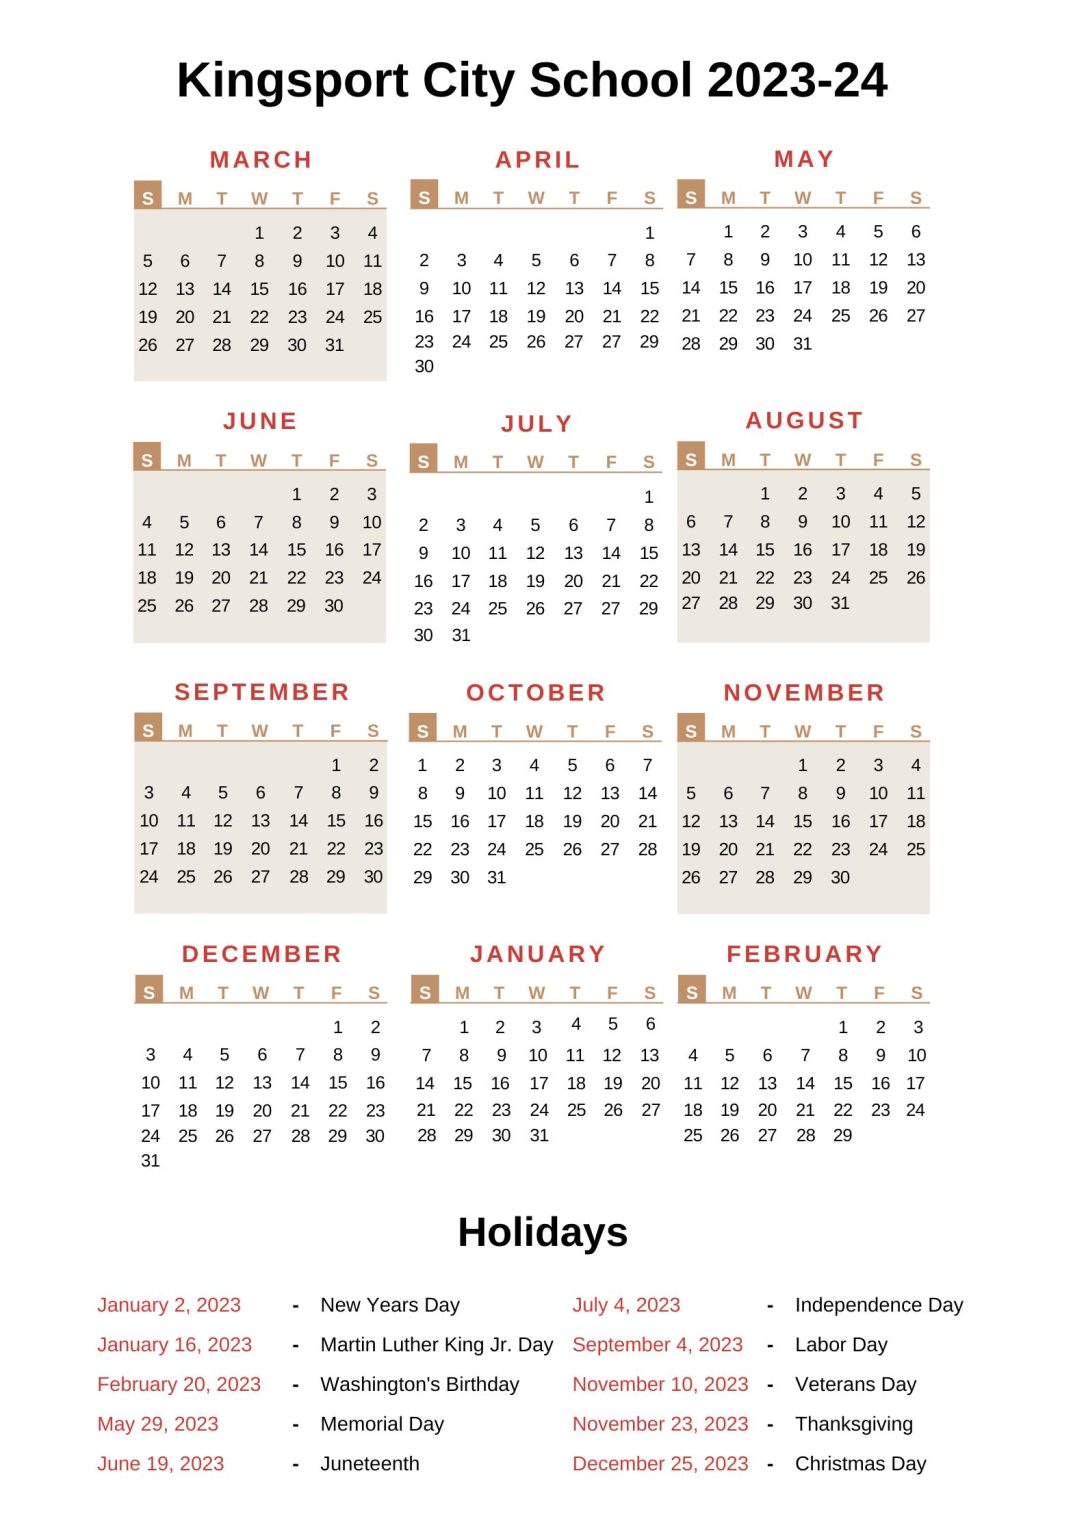 Kingsport City Schools Calendar [KCS] 202324 With Holidays